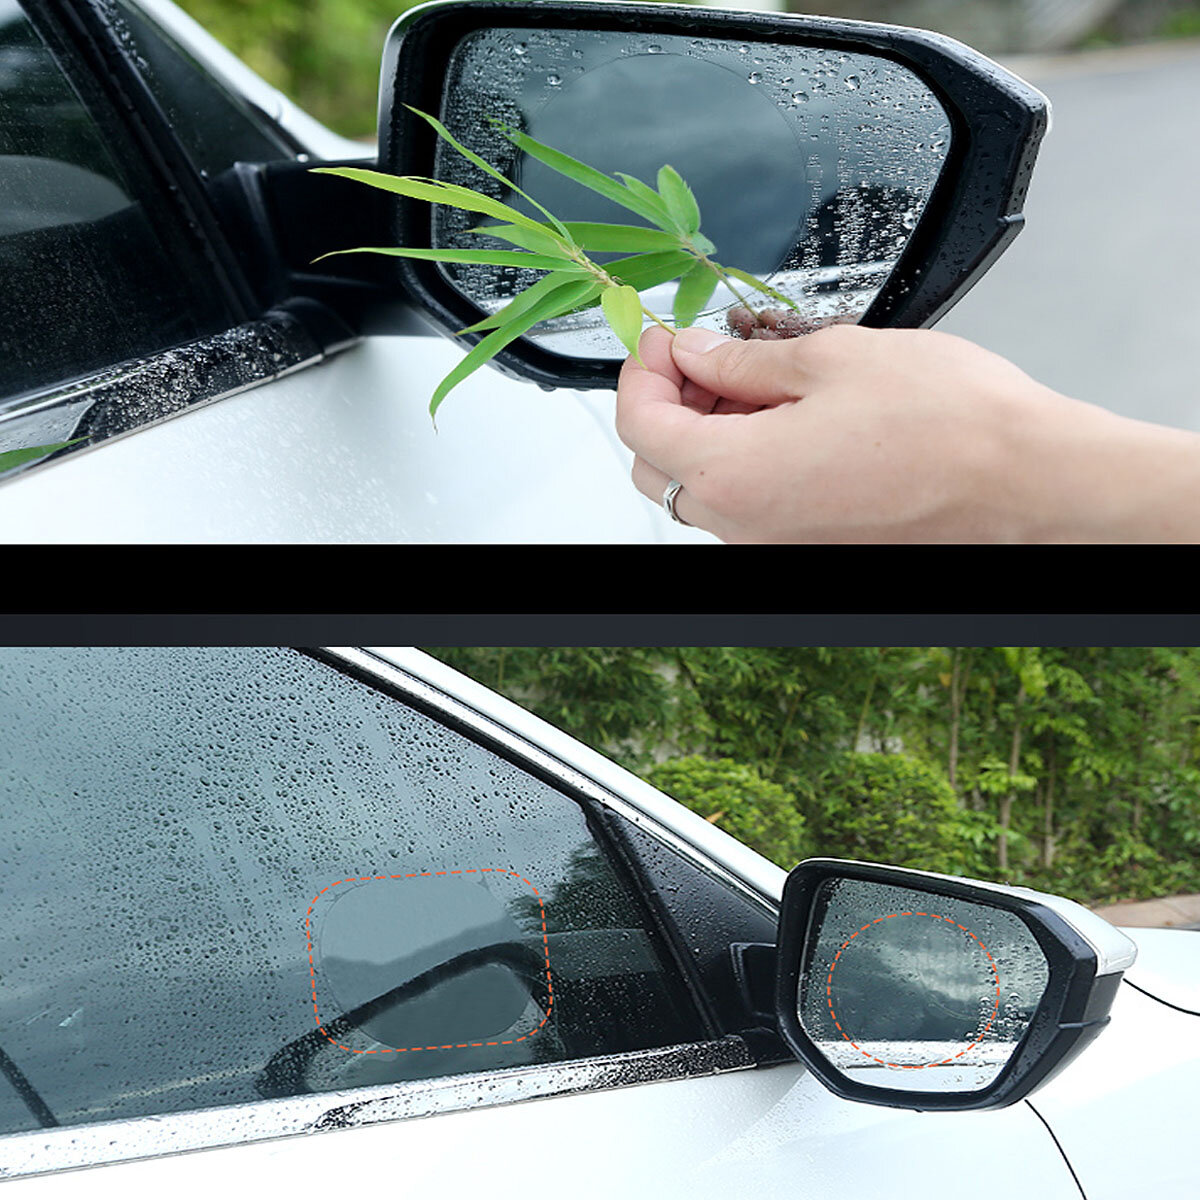 2× Oval Car Auto Anti Fog Rainproof Rearview Mirror Protective Film Accessory DE